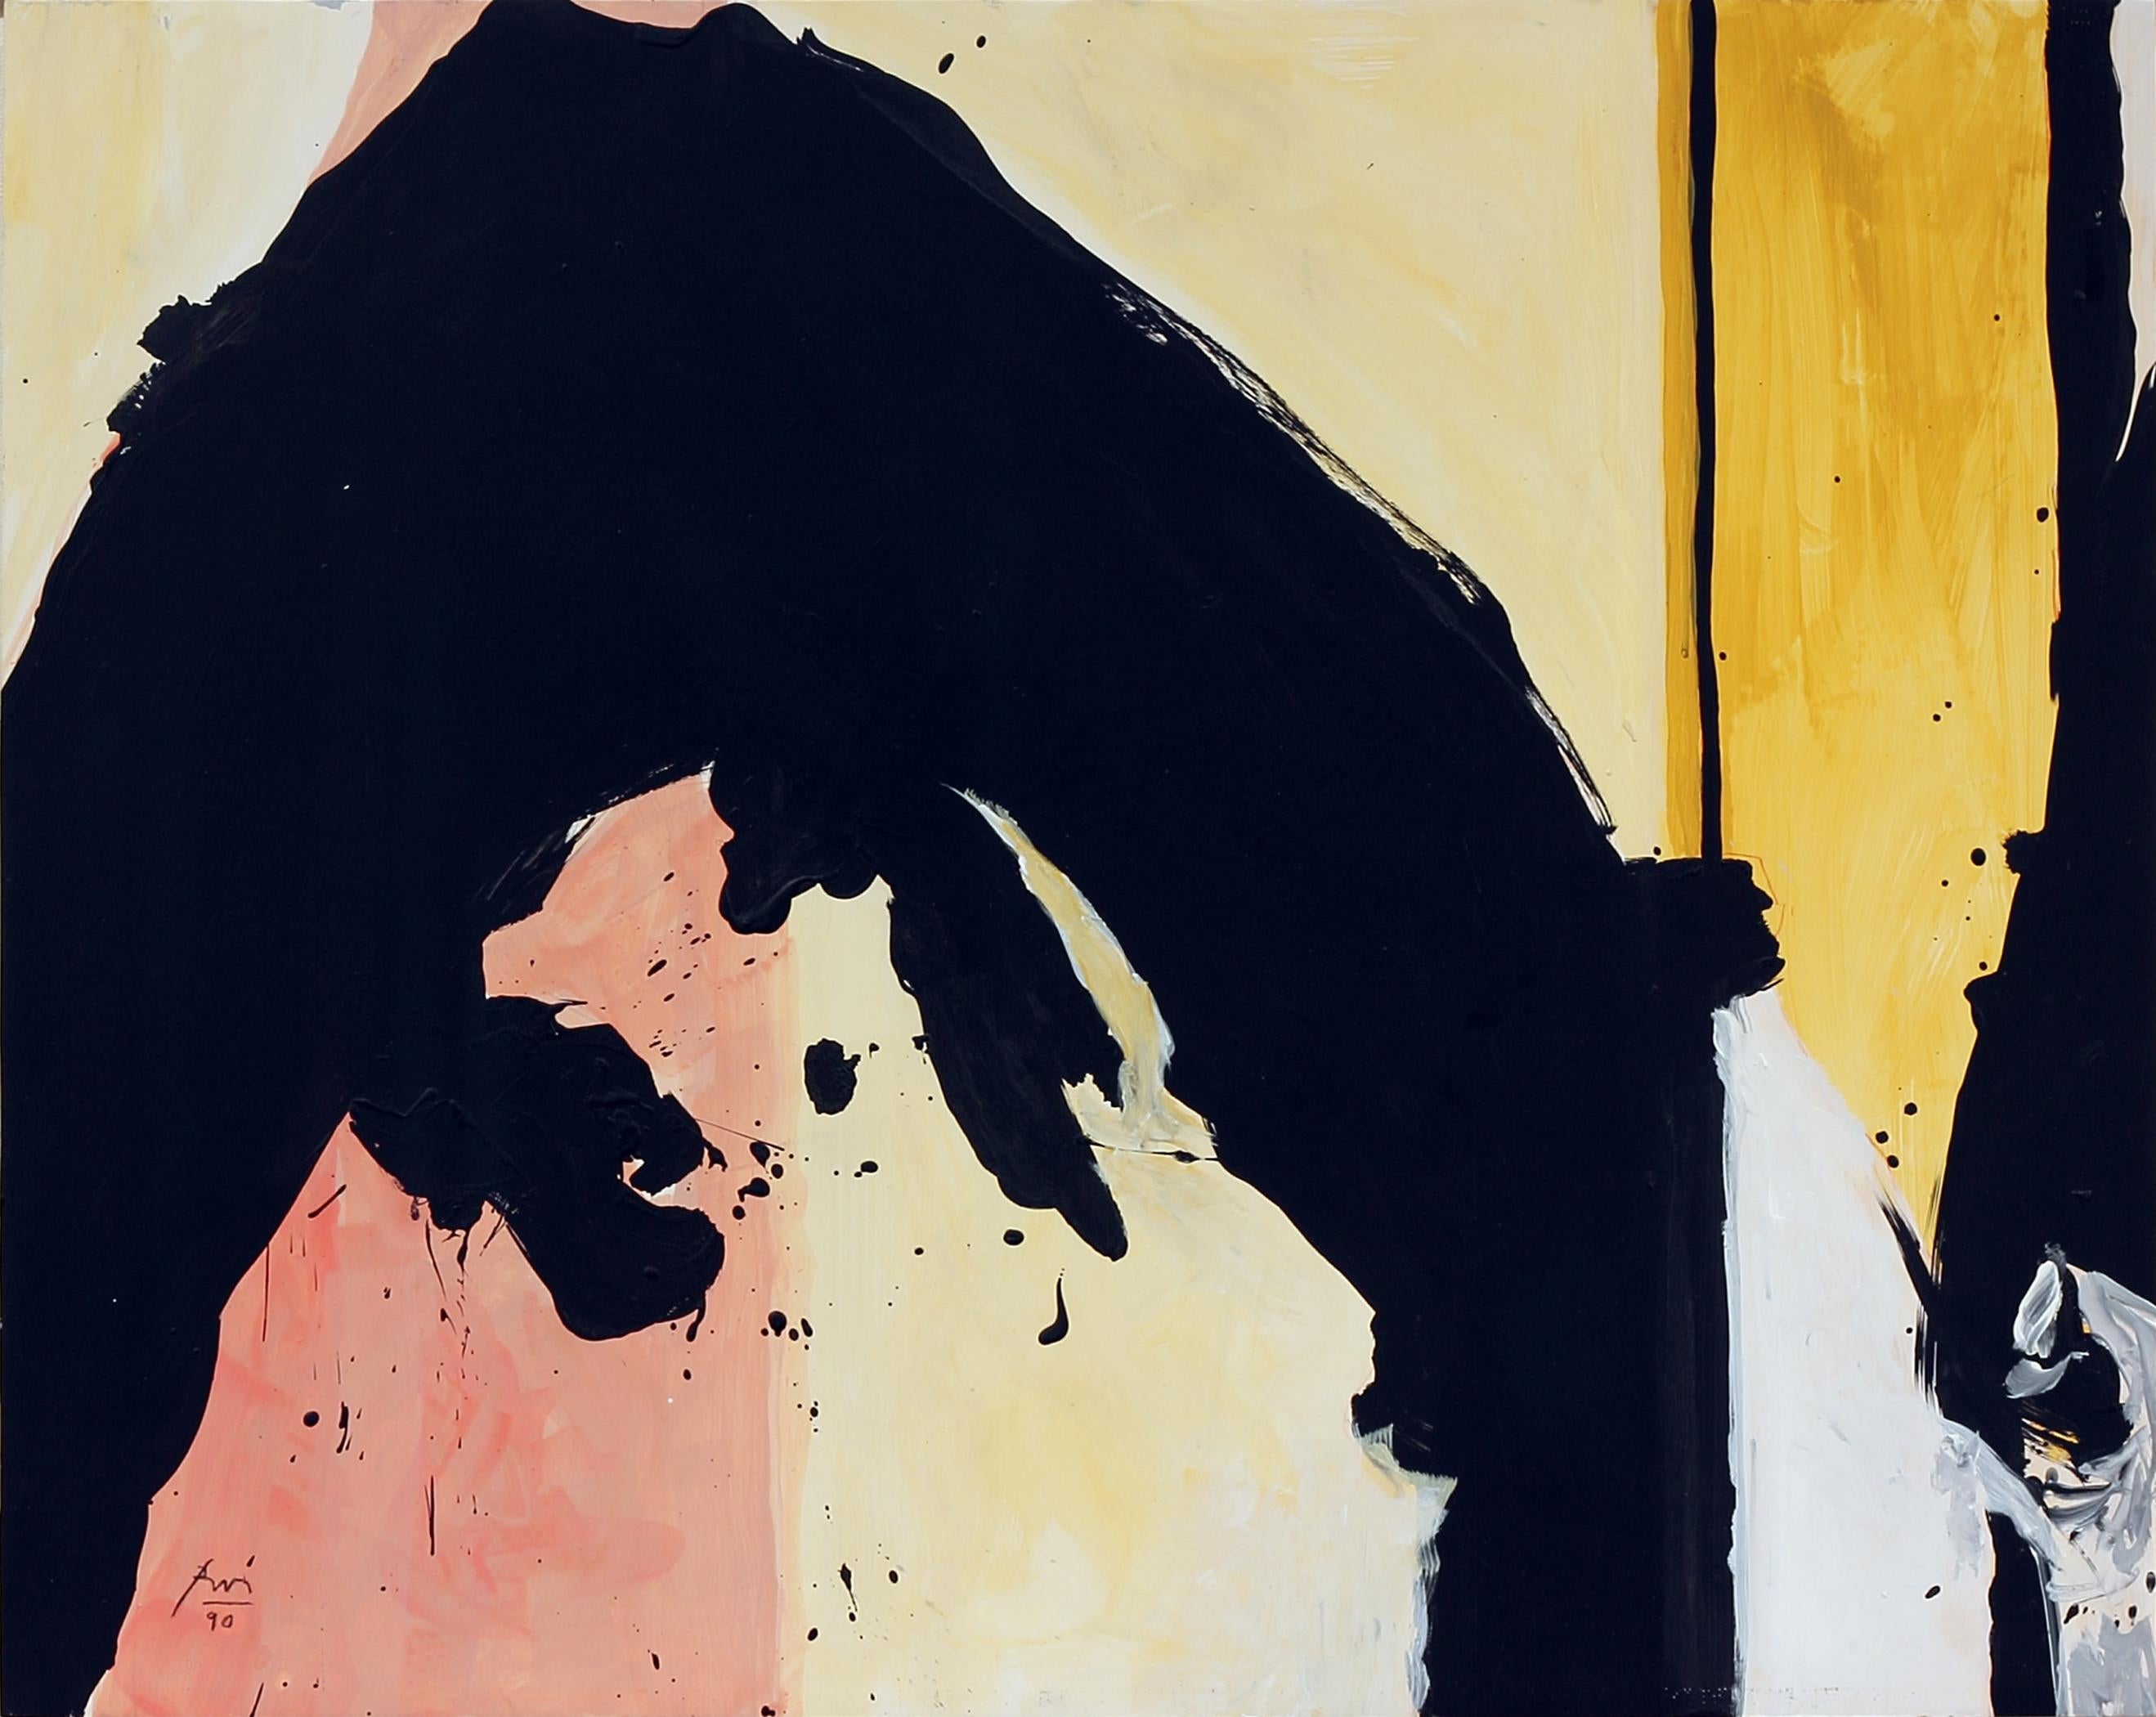 Abstract Painting Robert Motherwell - Sans titre